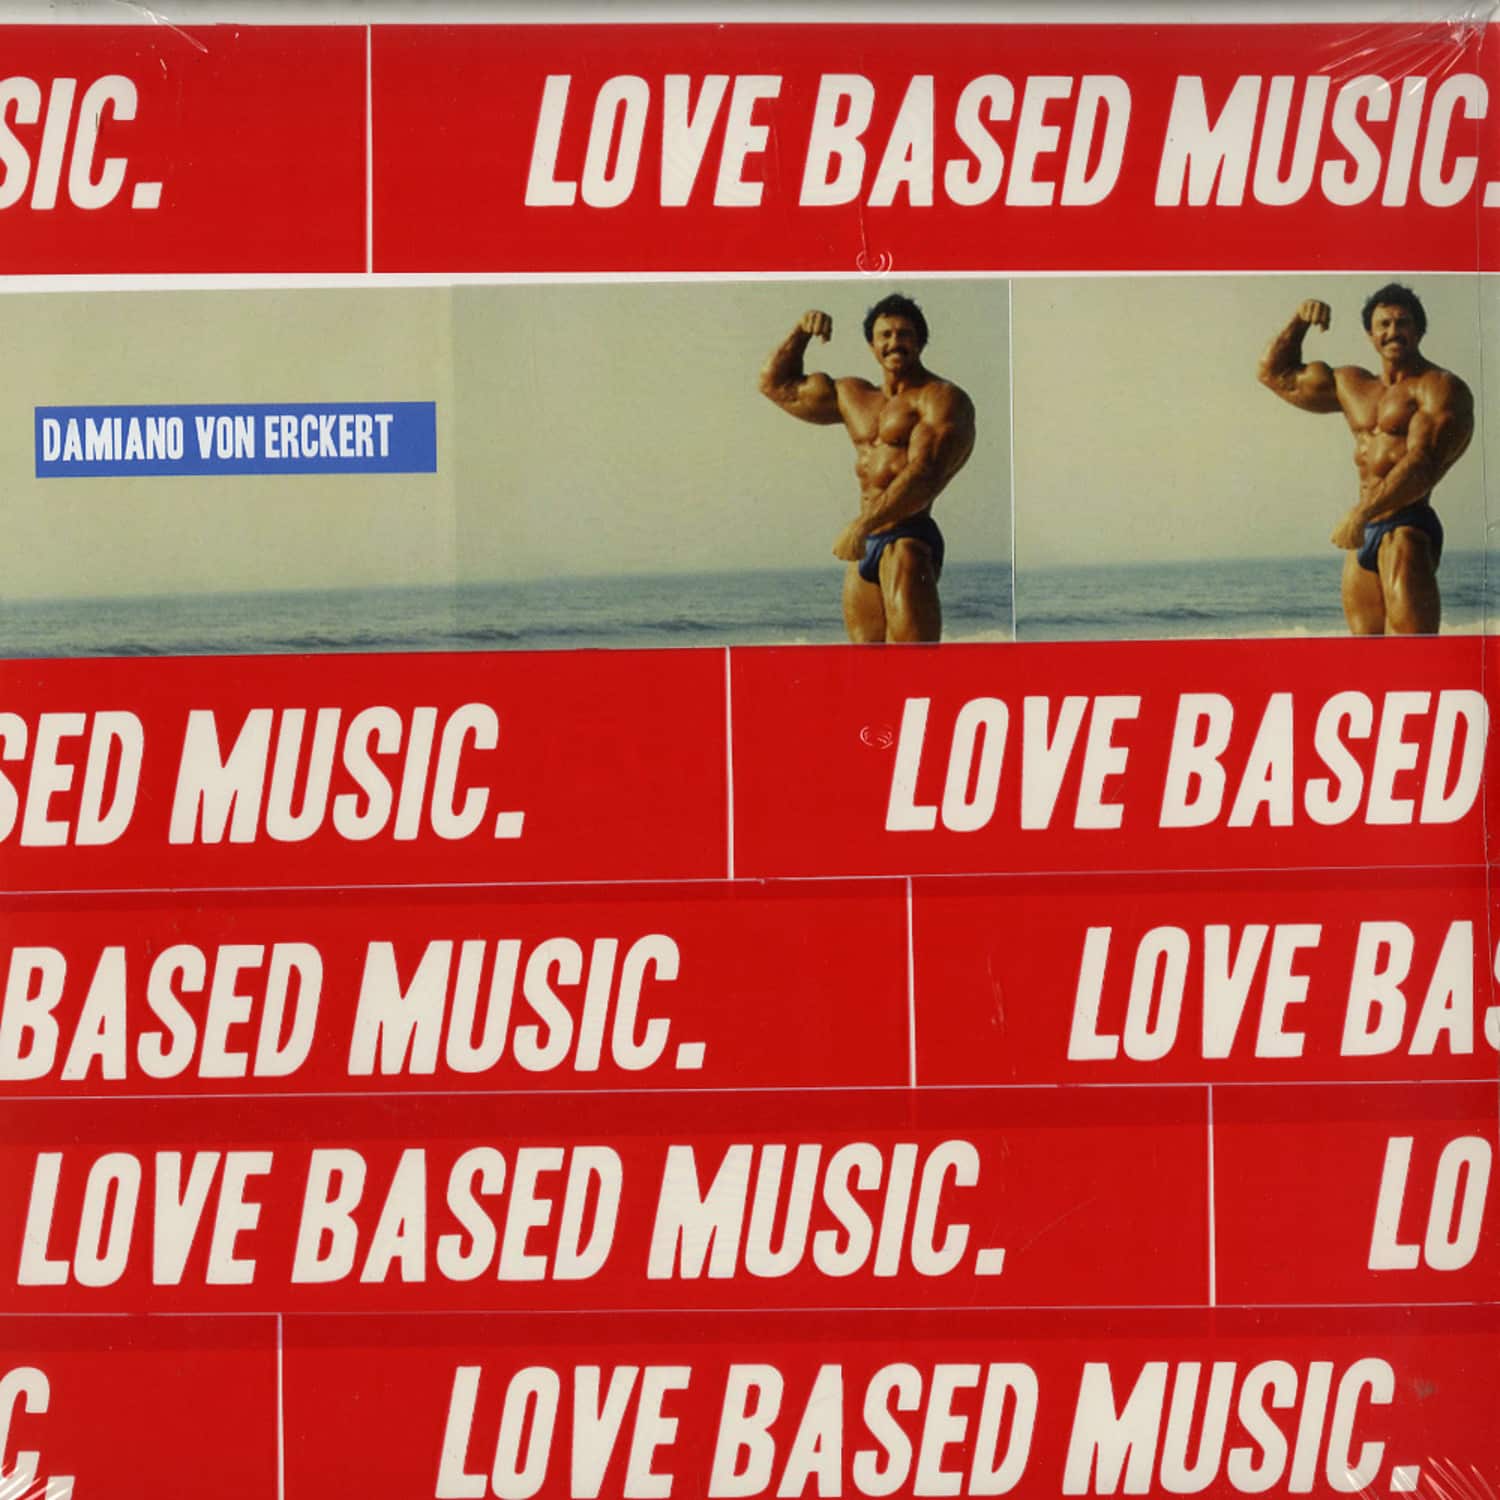 Damiano Von Erckert - LOVE BASED MUSIC. 